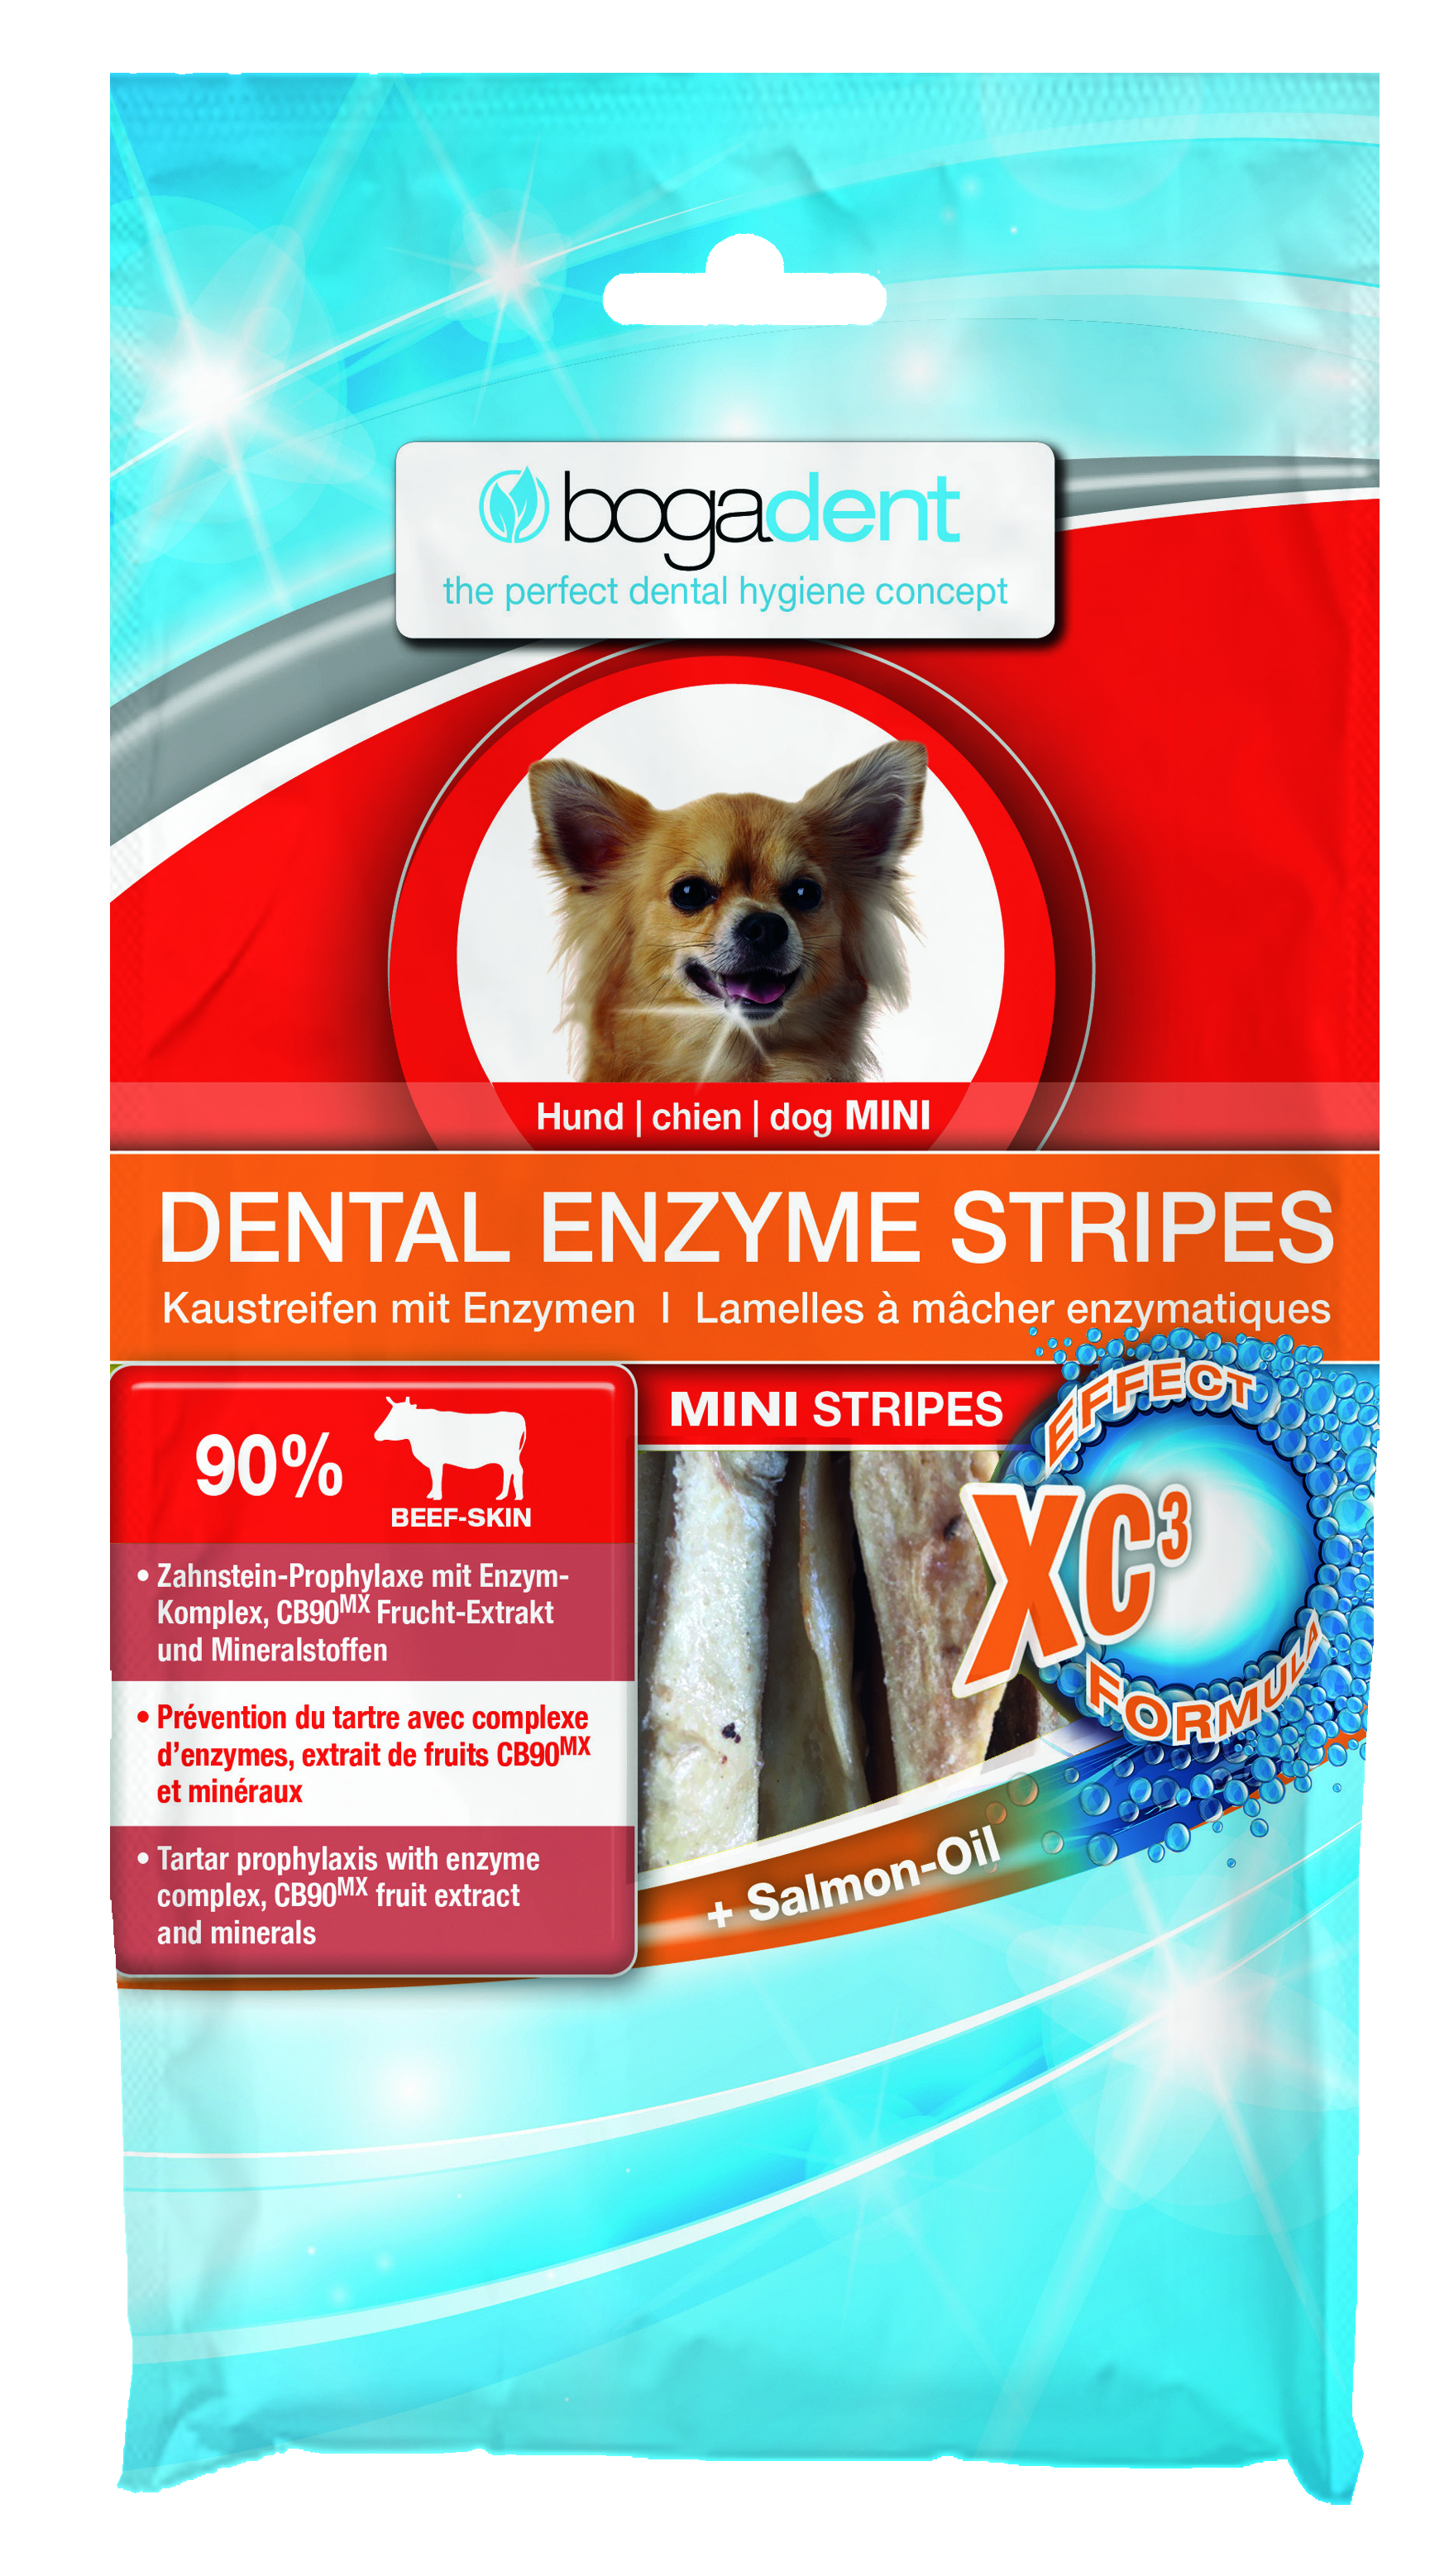 bogadent Dental Enzyme Stripes Hund Mini 100g